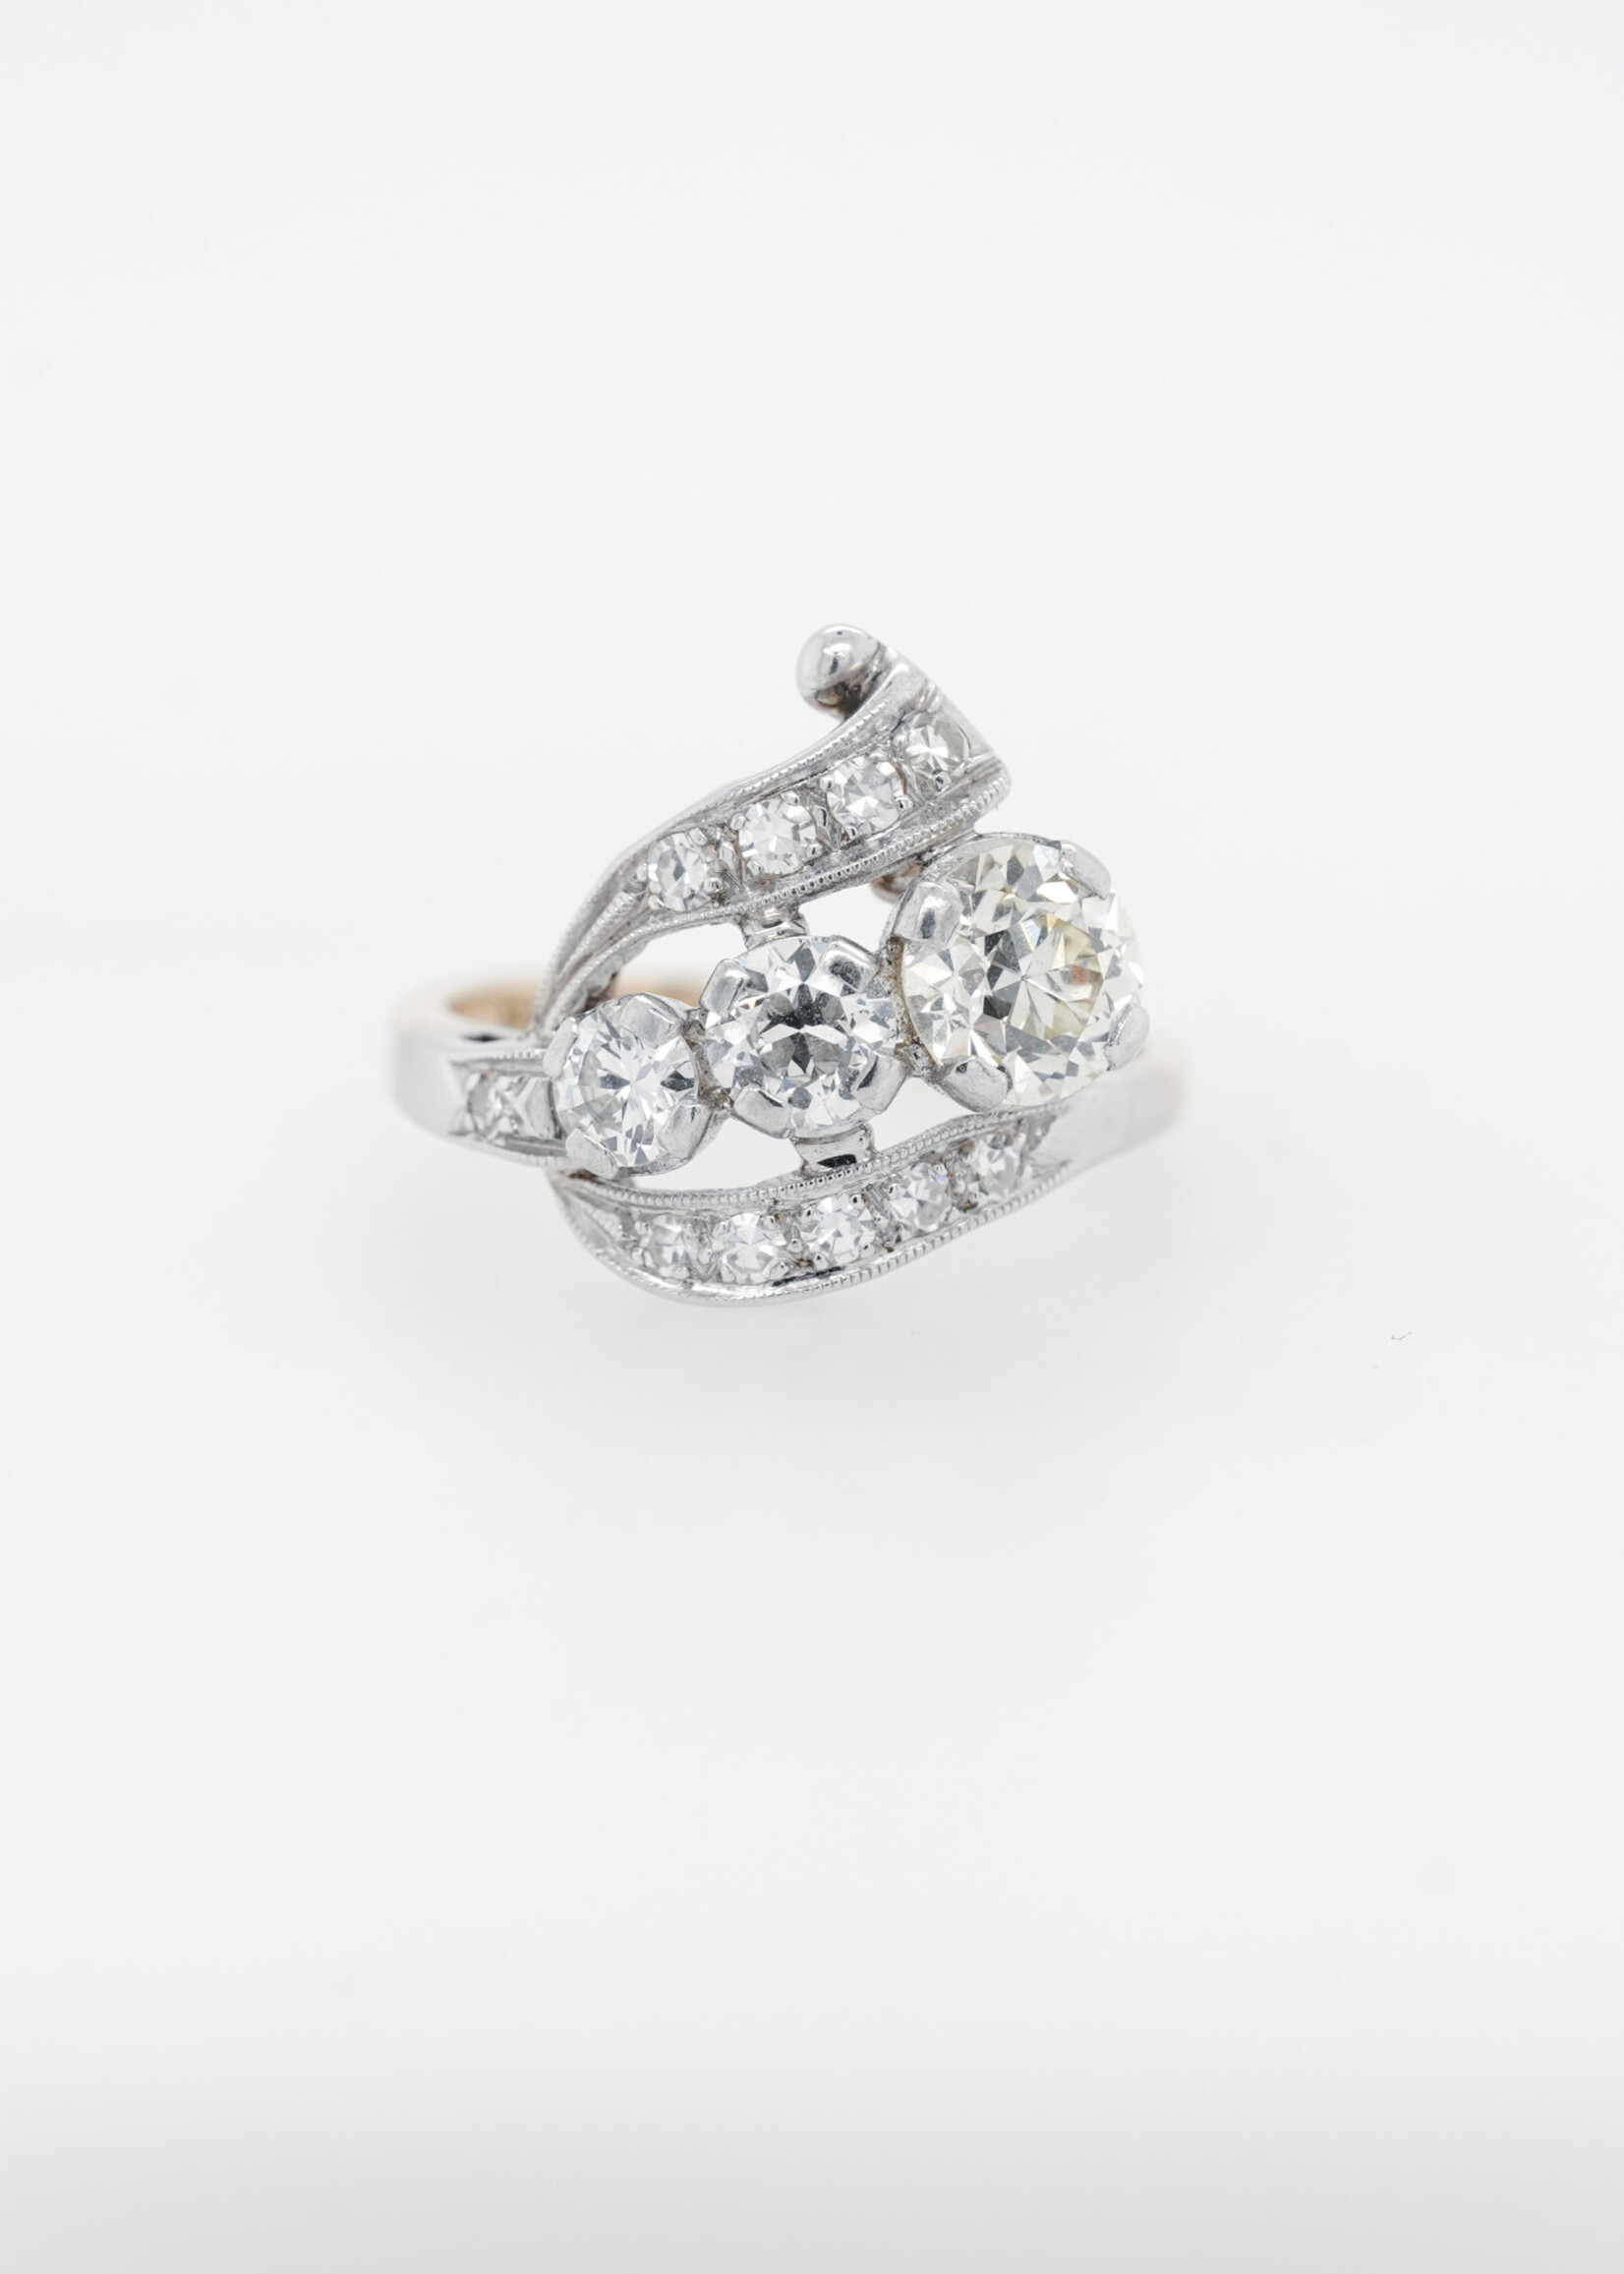 Platinum/14KY 3.20g 1.60ctw Diamond Antique Fashion Ring (size 5.5)